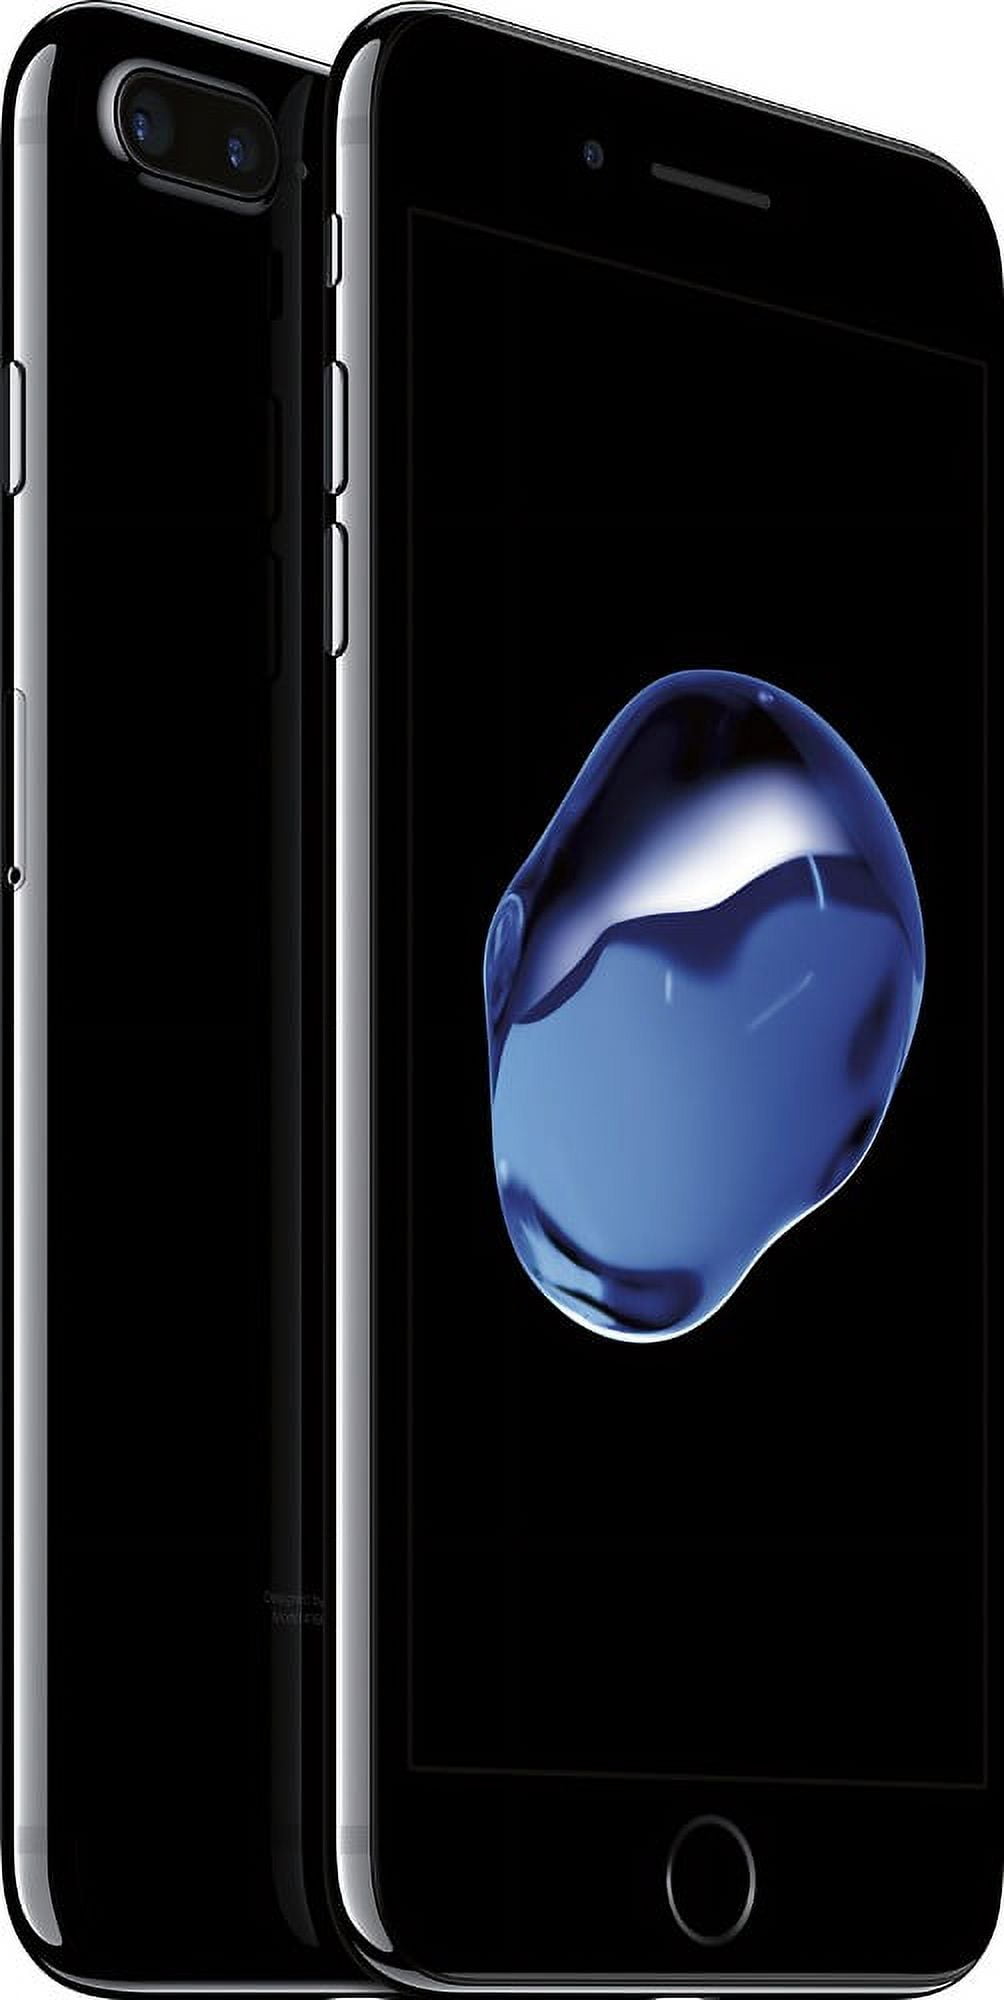 Restored Apple iPhone 7 Plus 128GB, Jet Black - Unlocked GSM